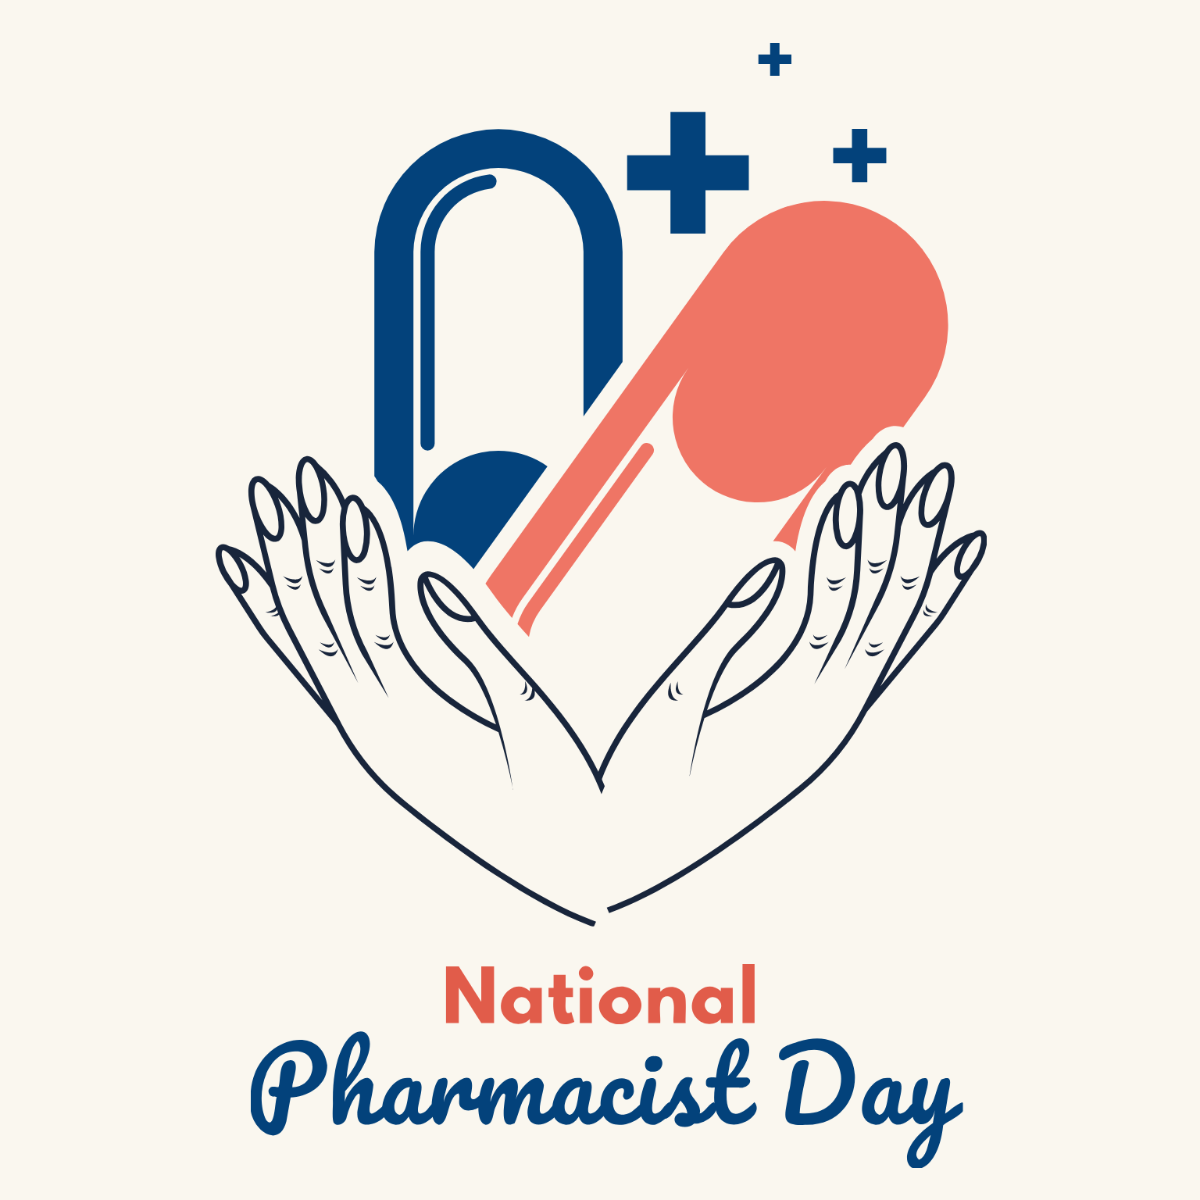 National Pharmacist Day Illustration Template